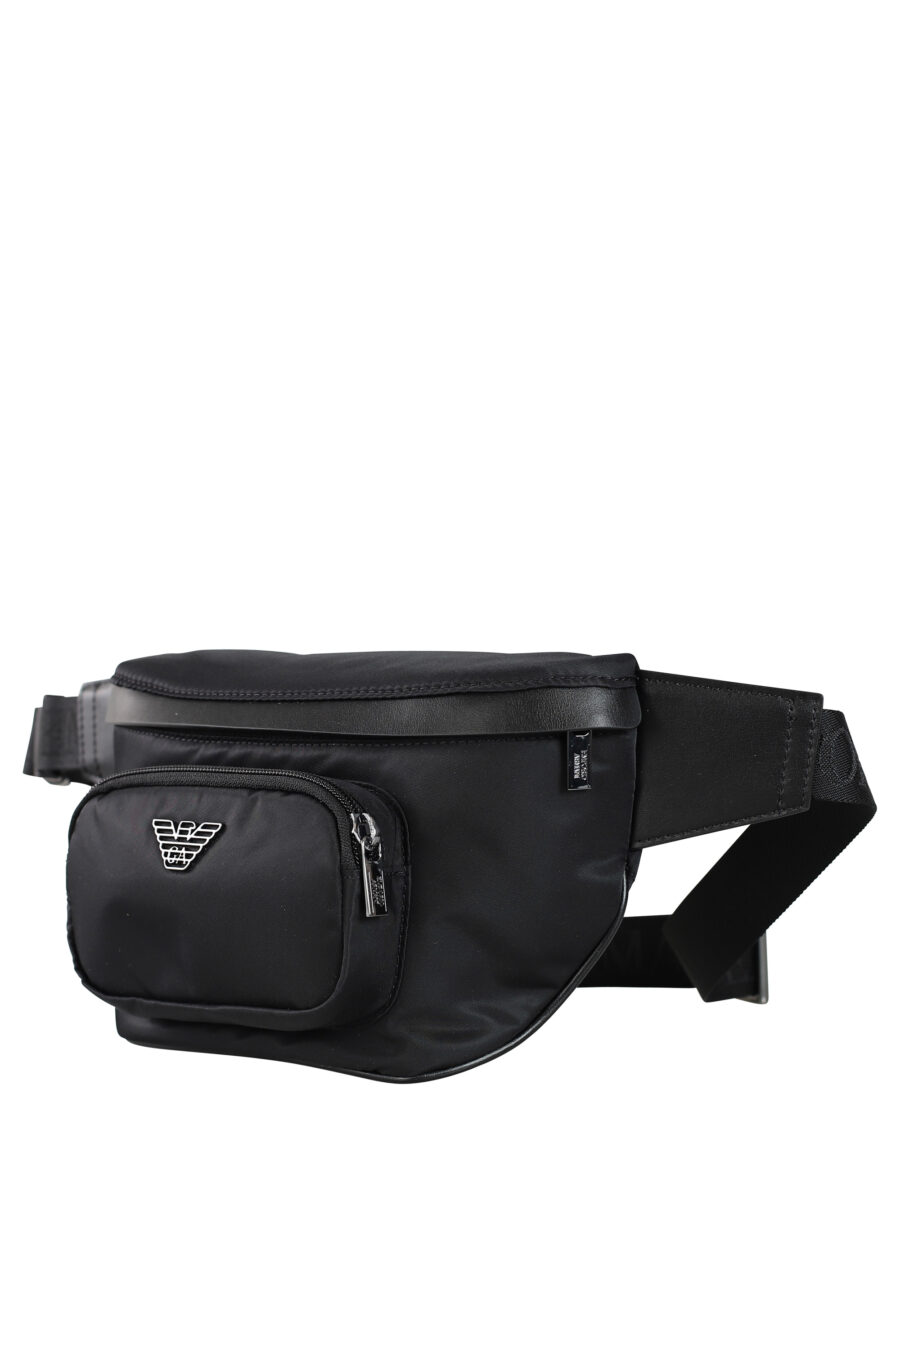 Black bum bag with metal mini logo - 8053616709654 2